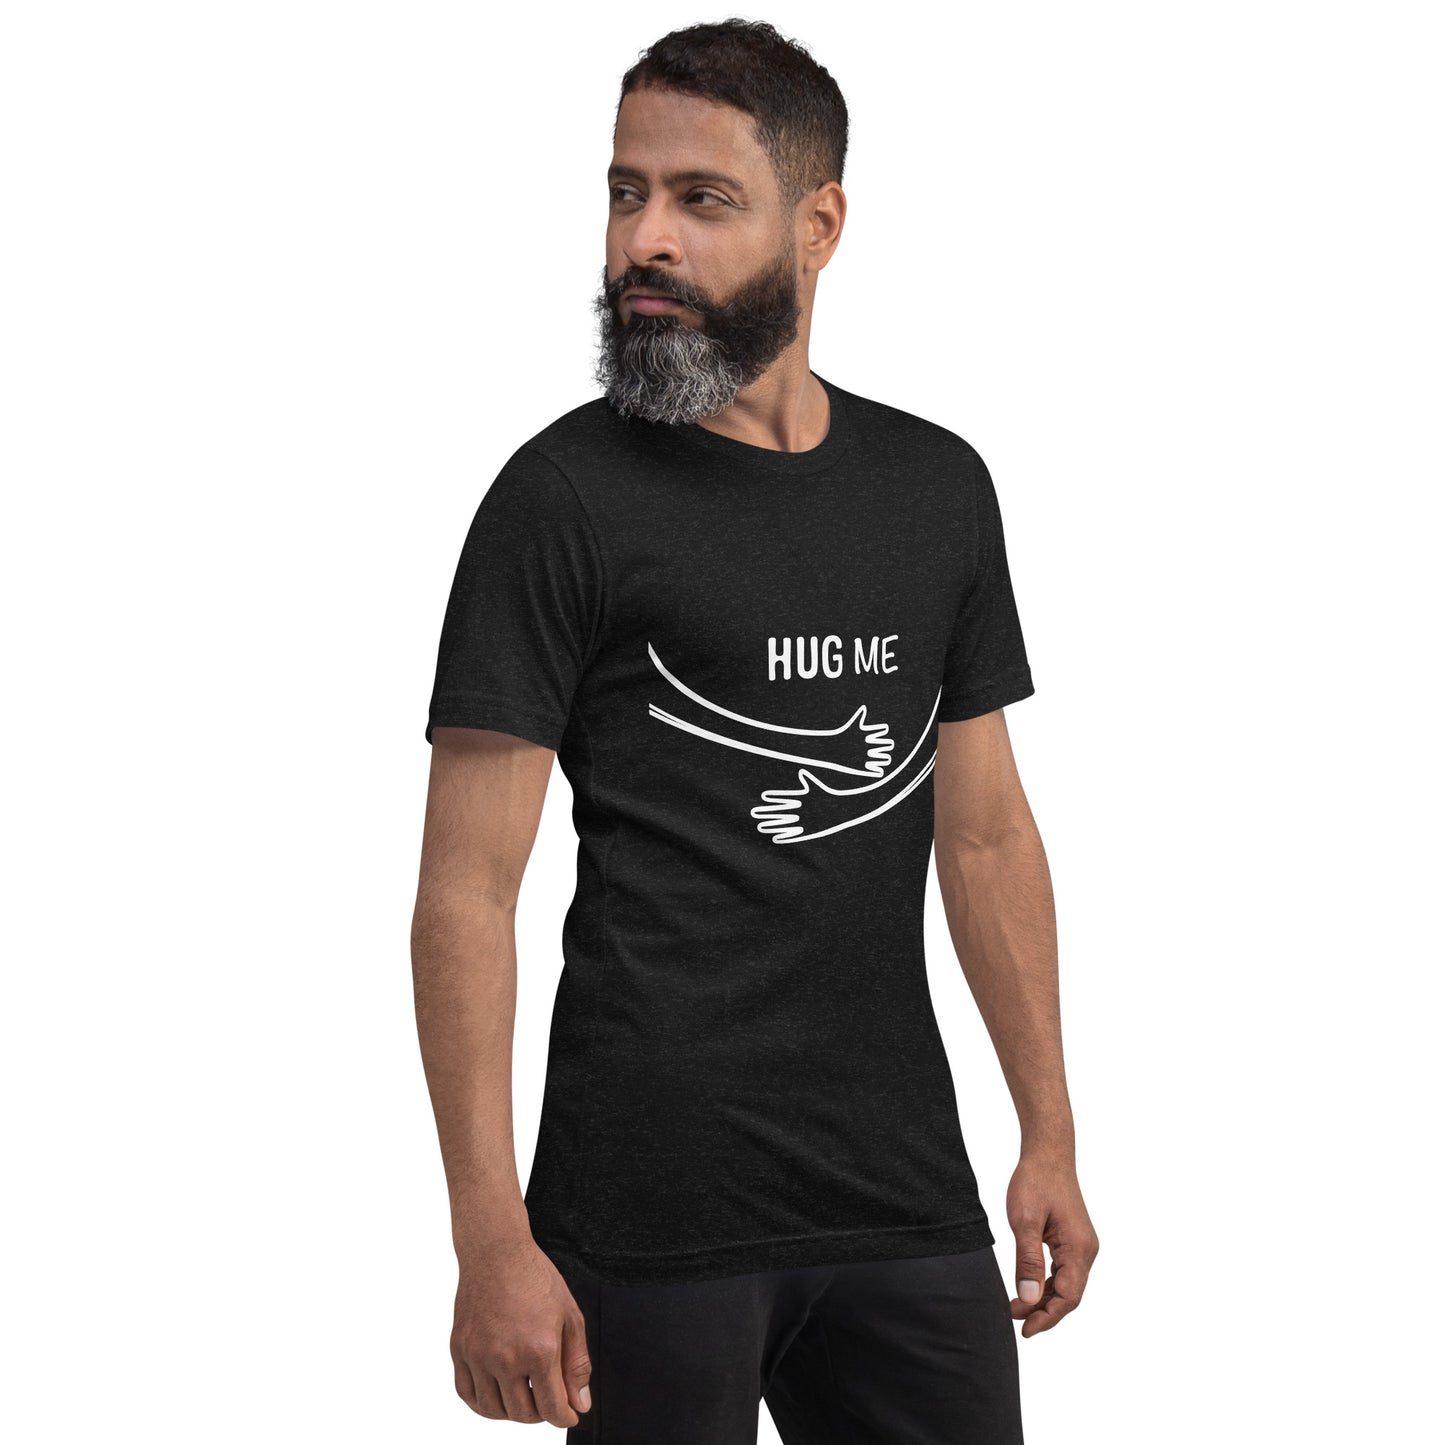 Hug me - Unisex t-shirt